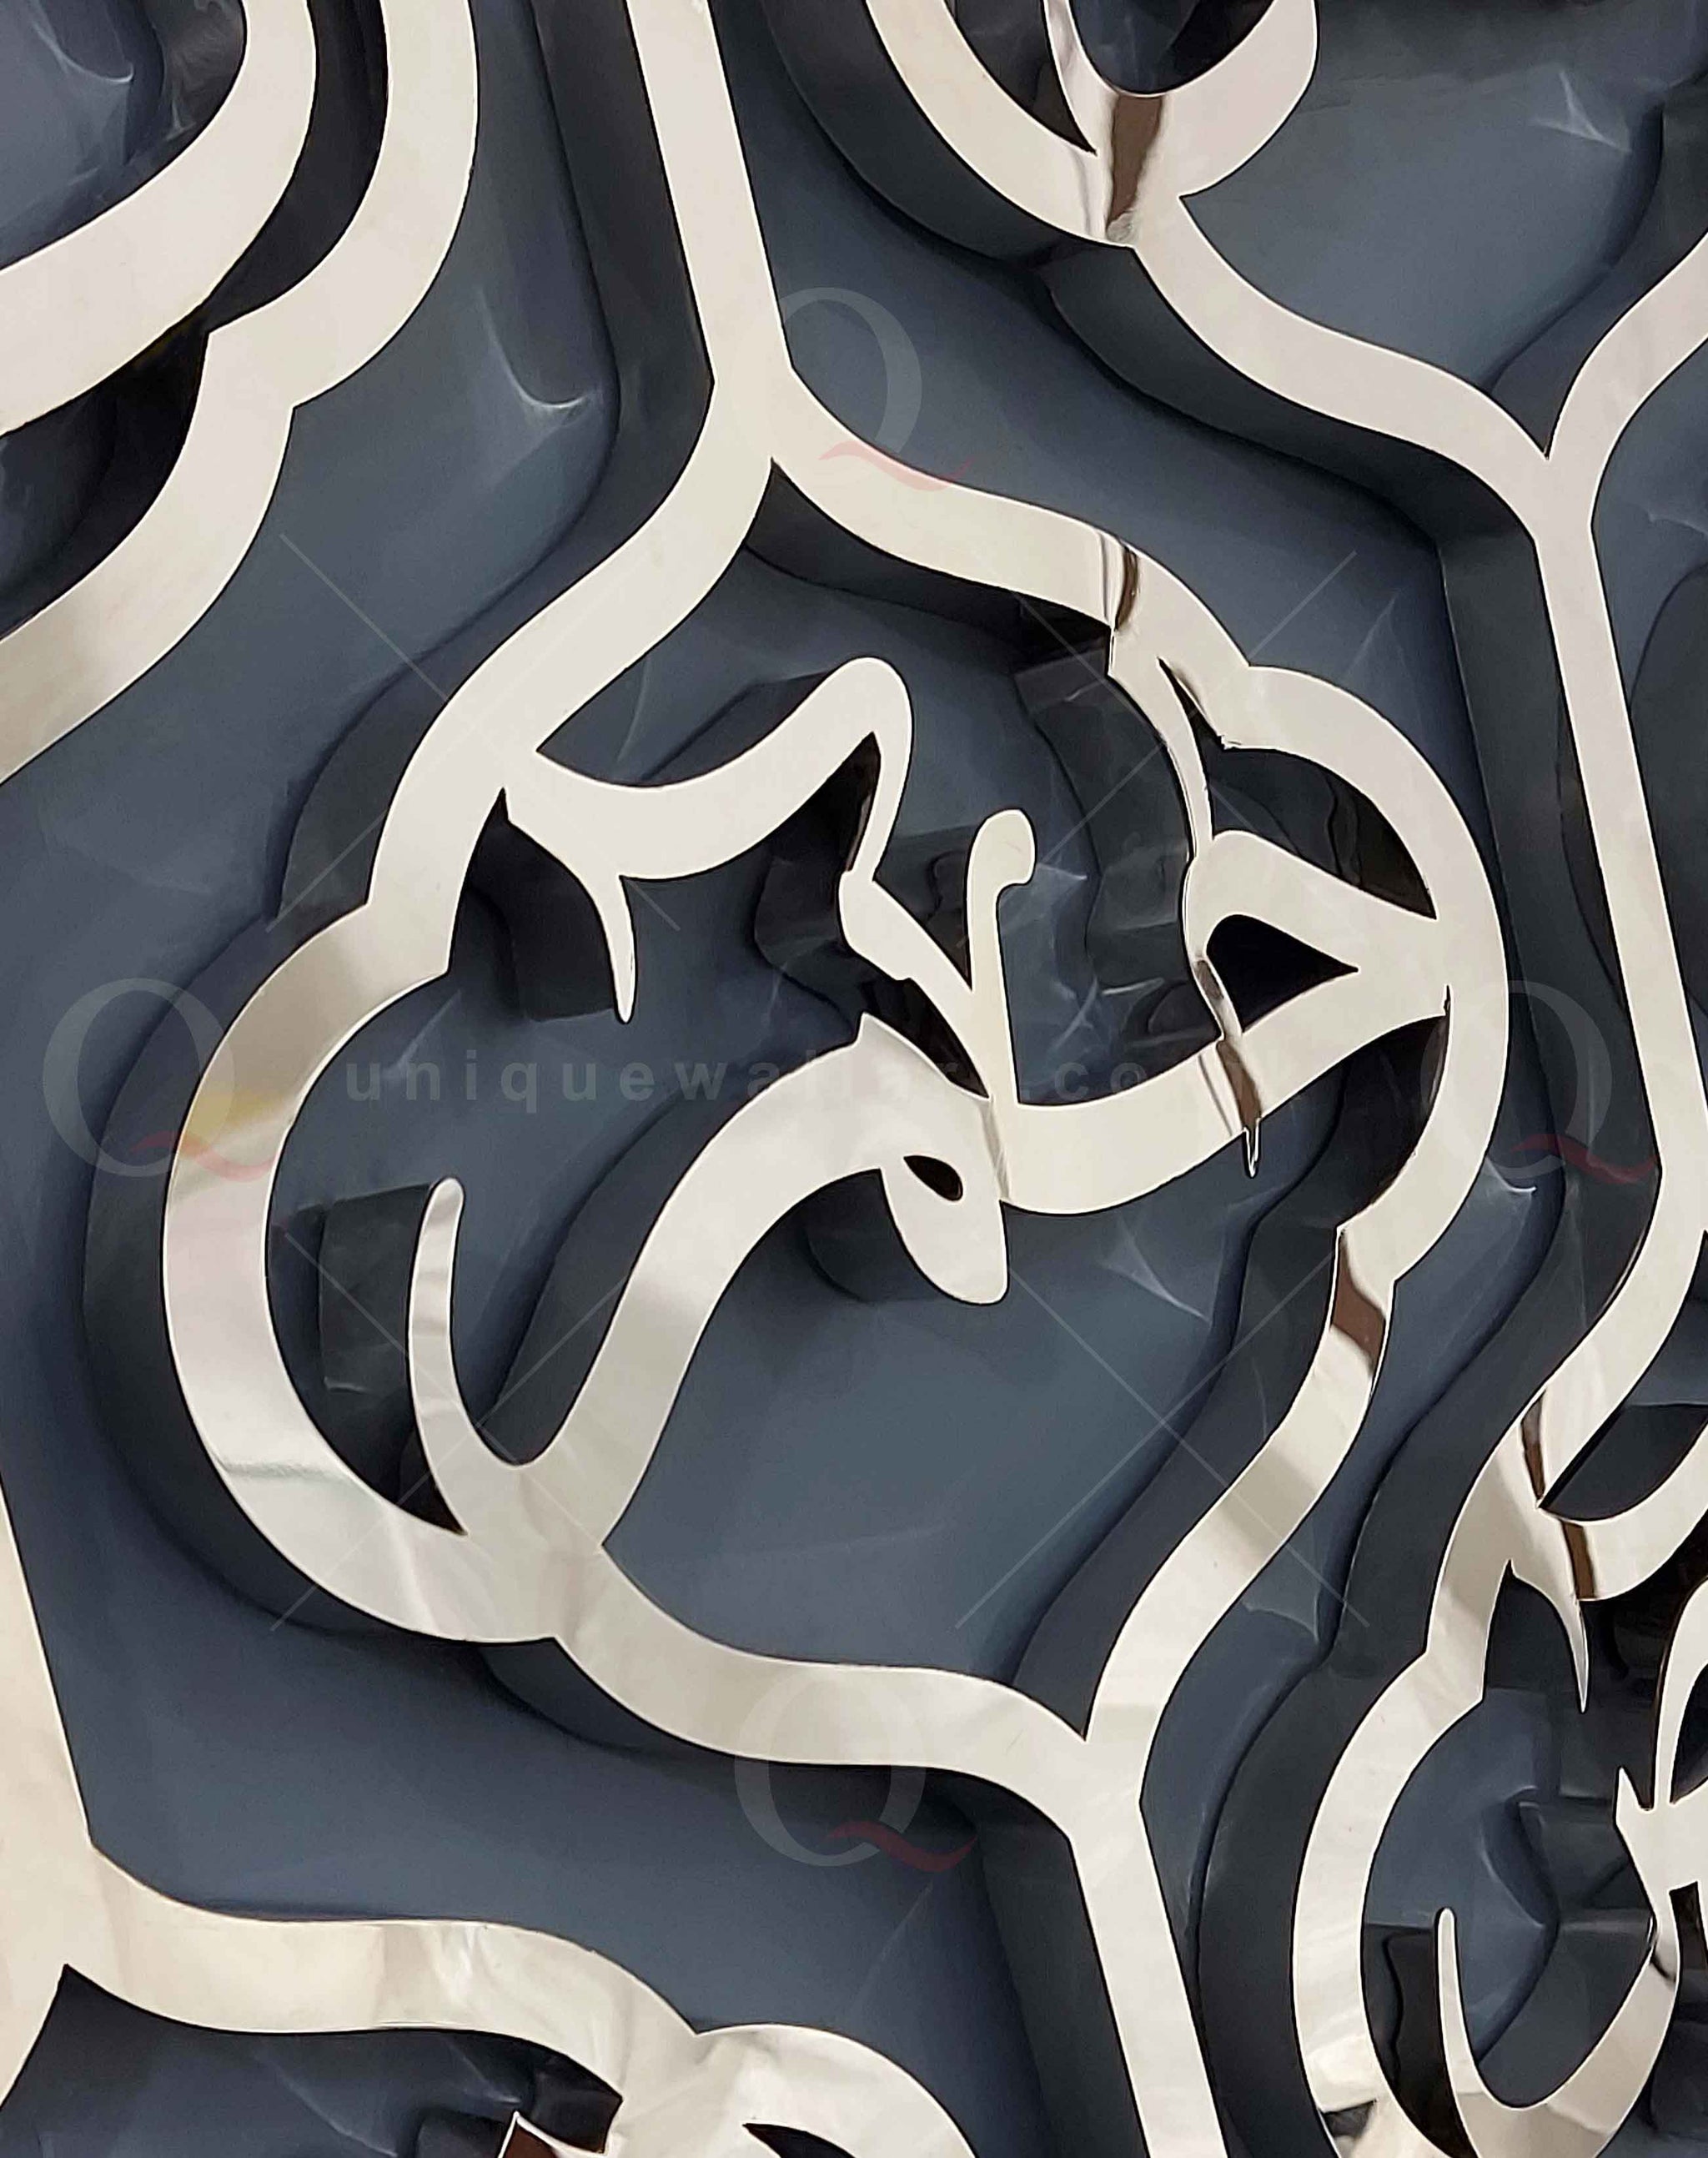 Loh e Qurani 3D Handmade Stainless Steel Islamic Wall Art